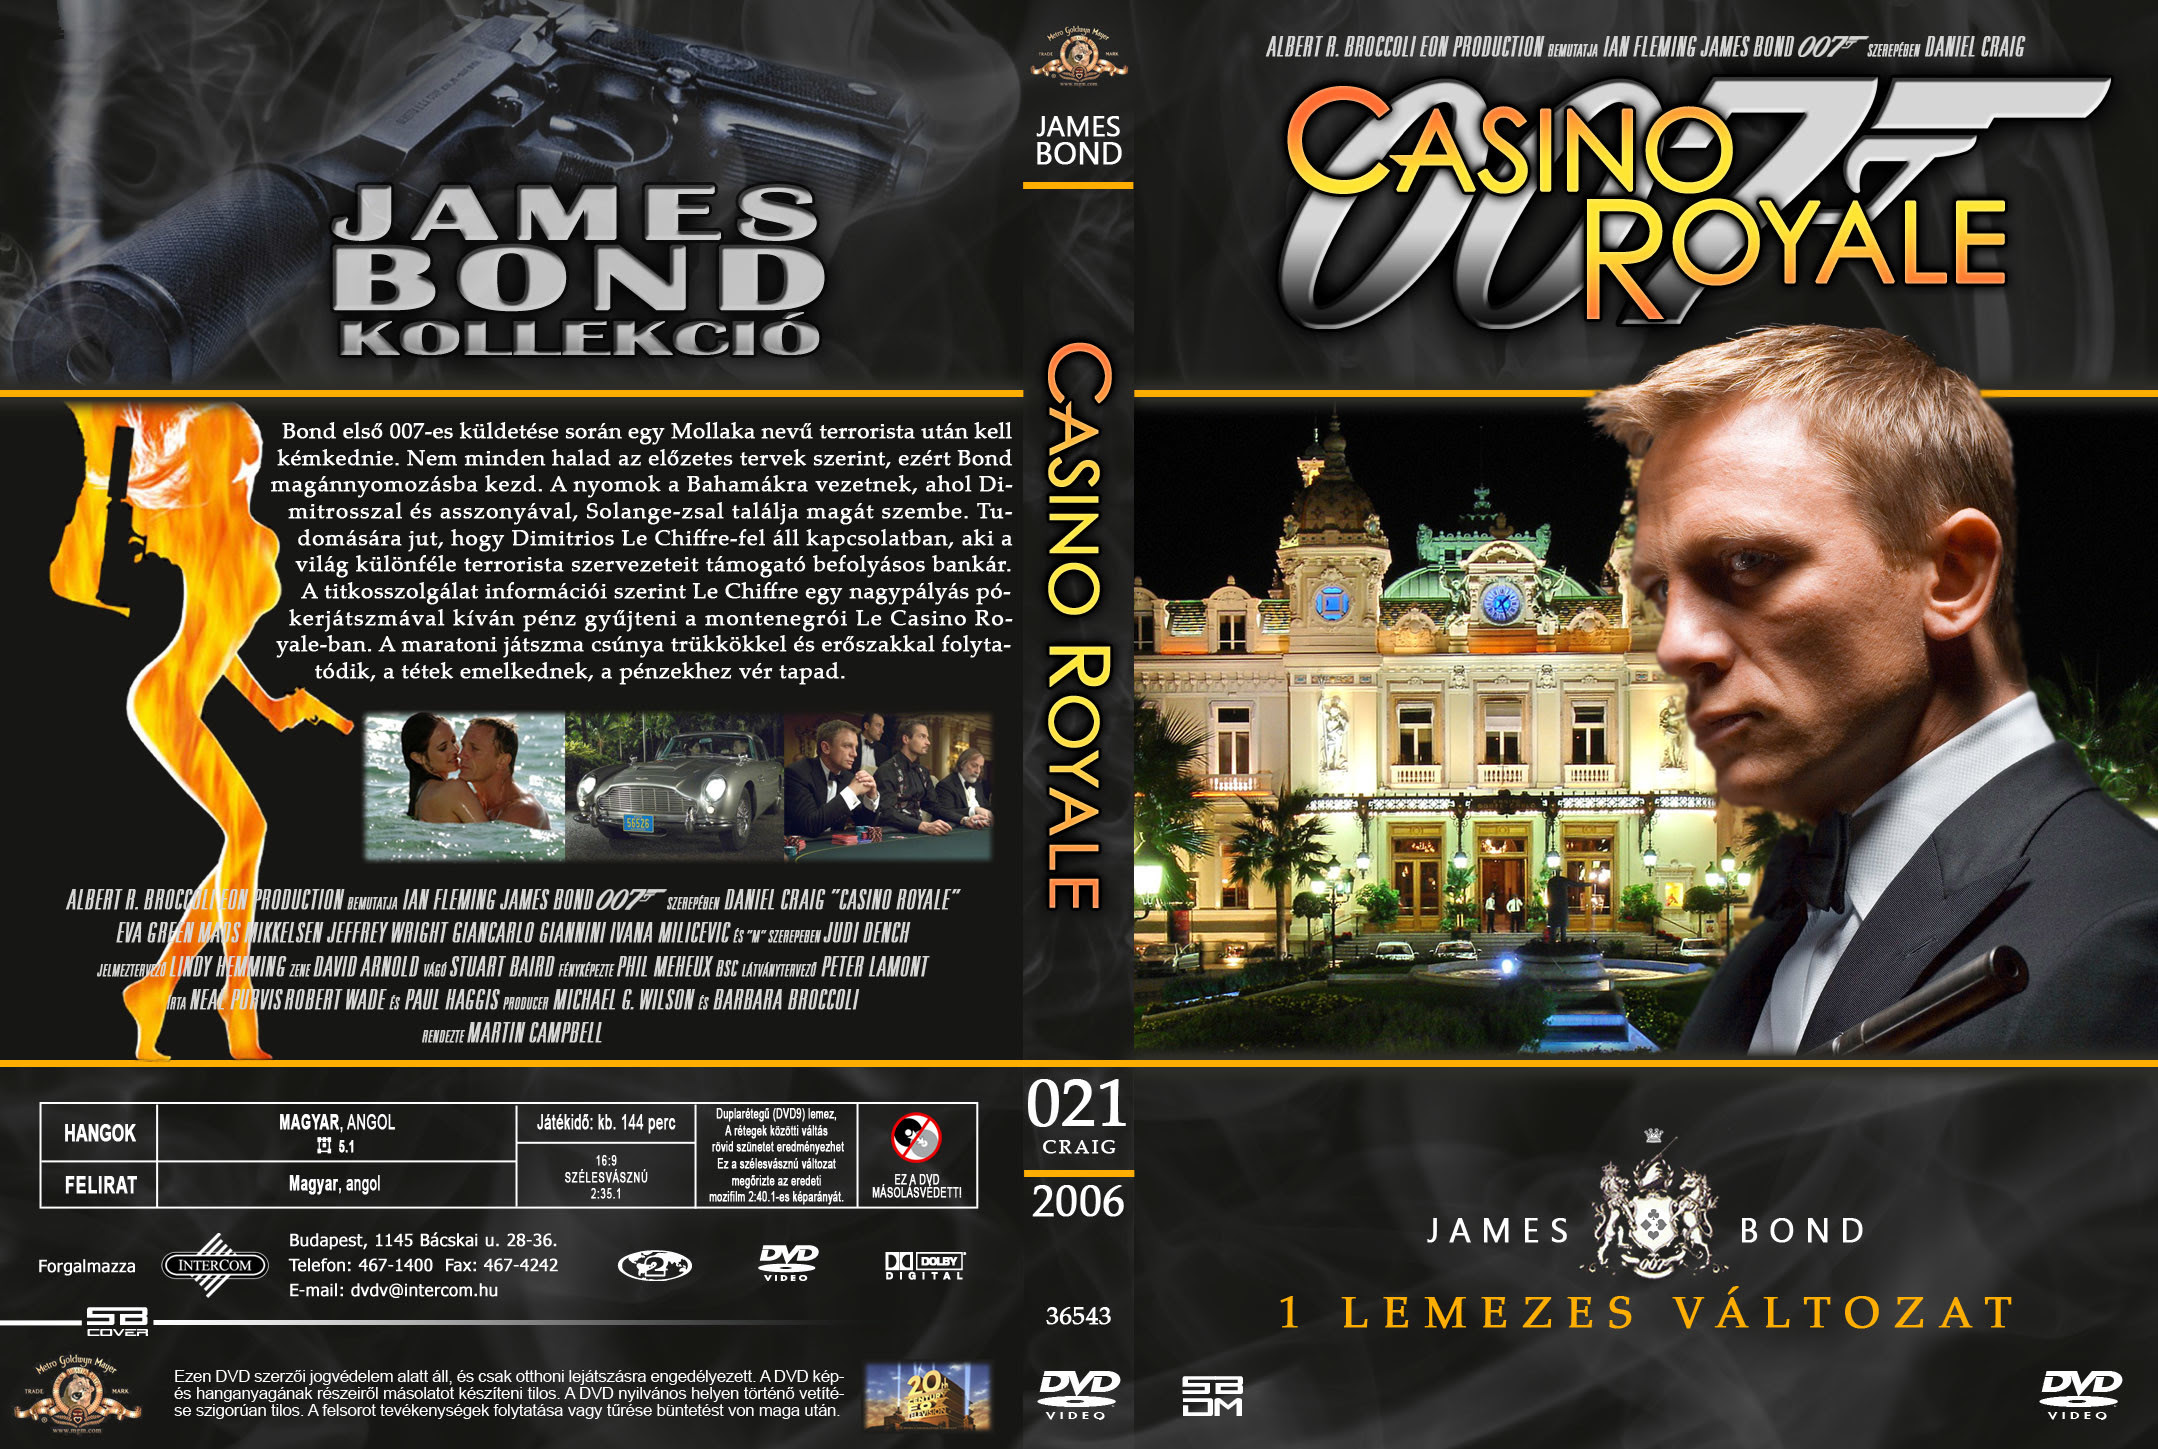 James Bond Casino Royale Free Online